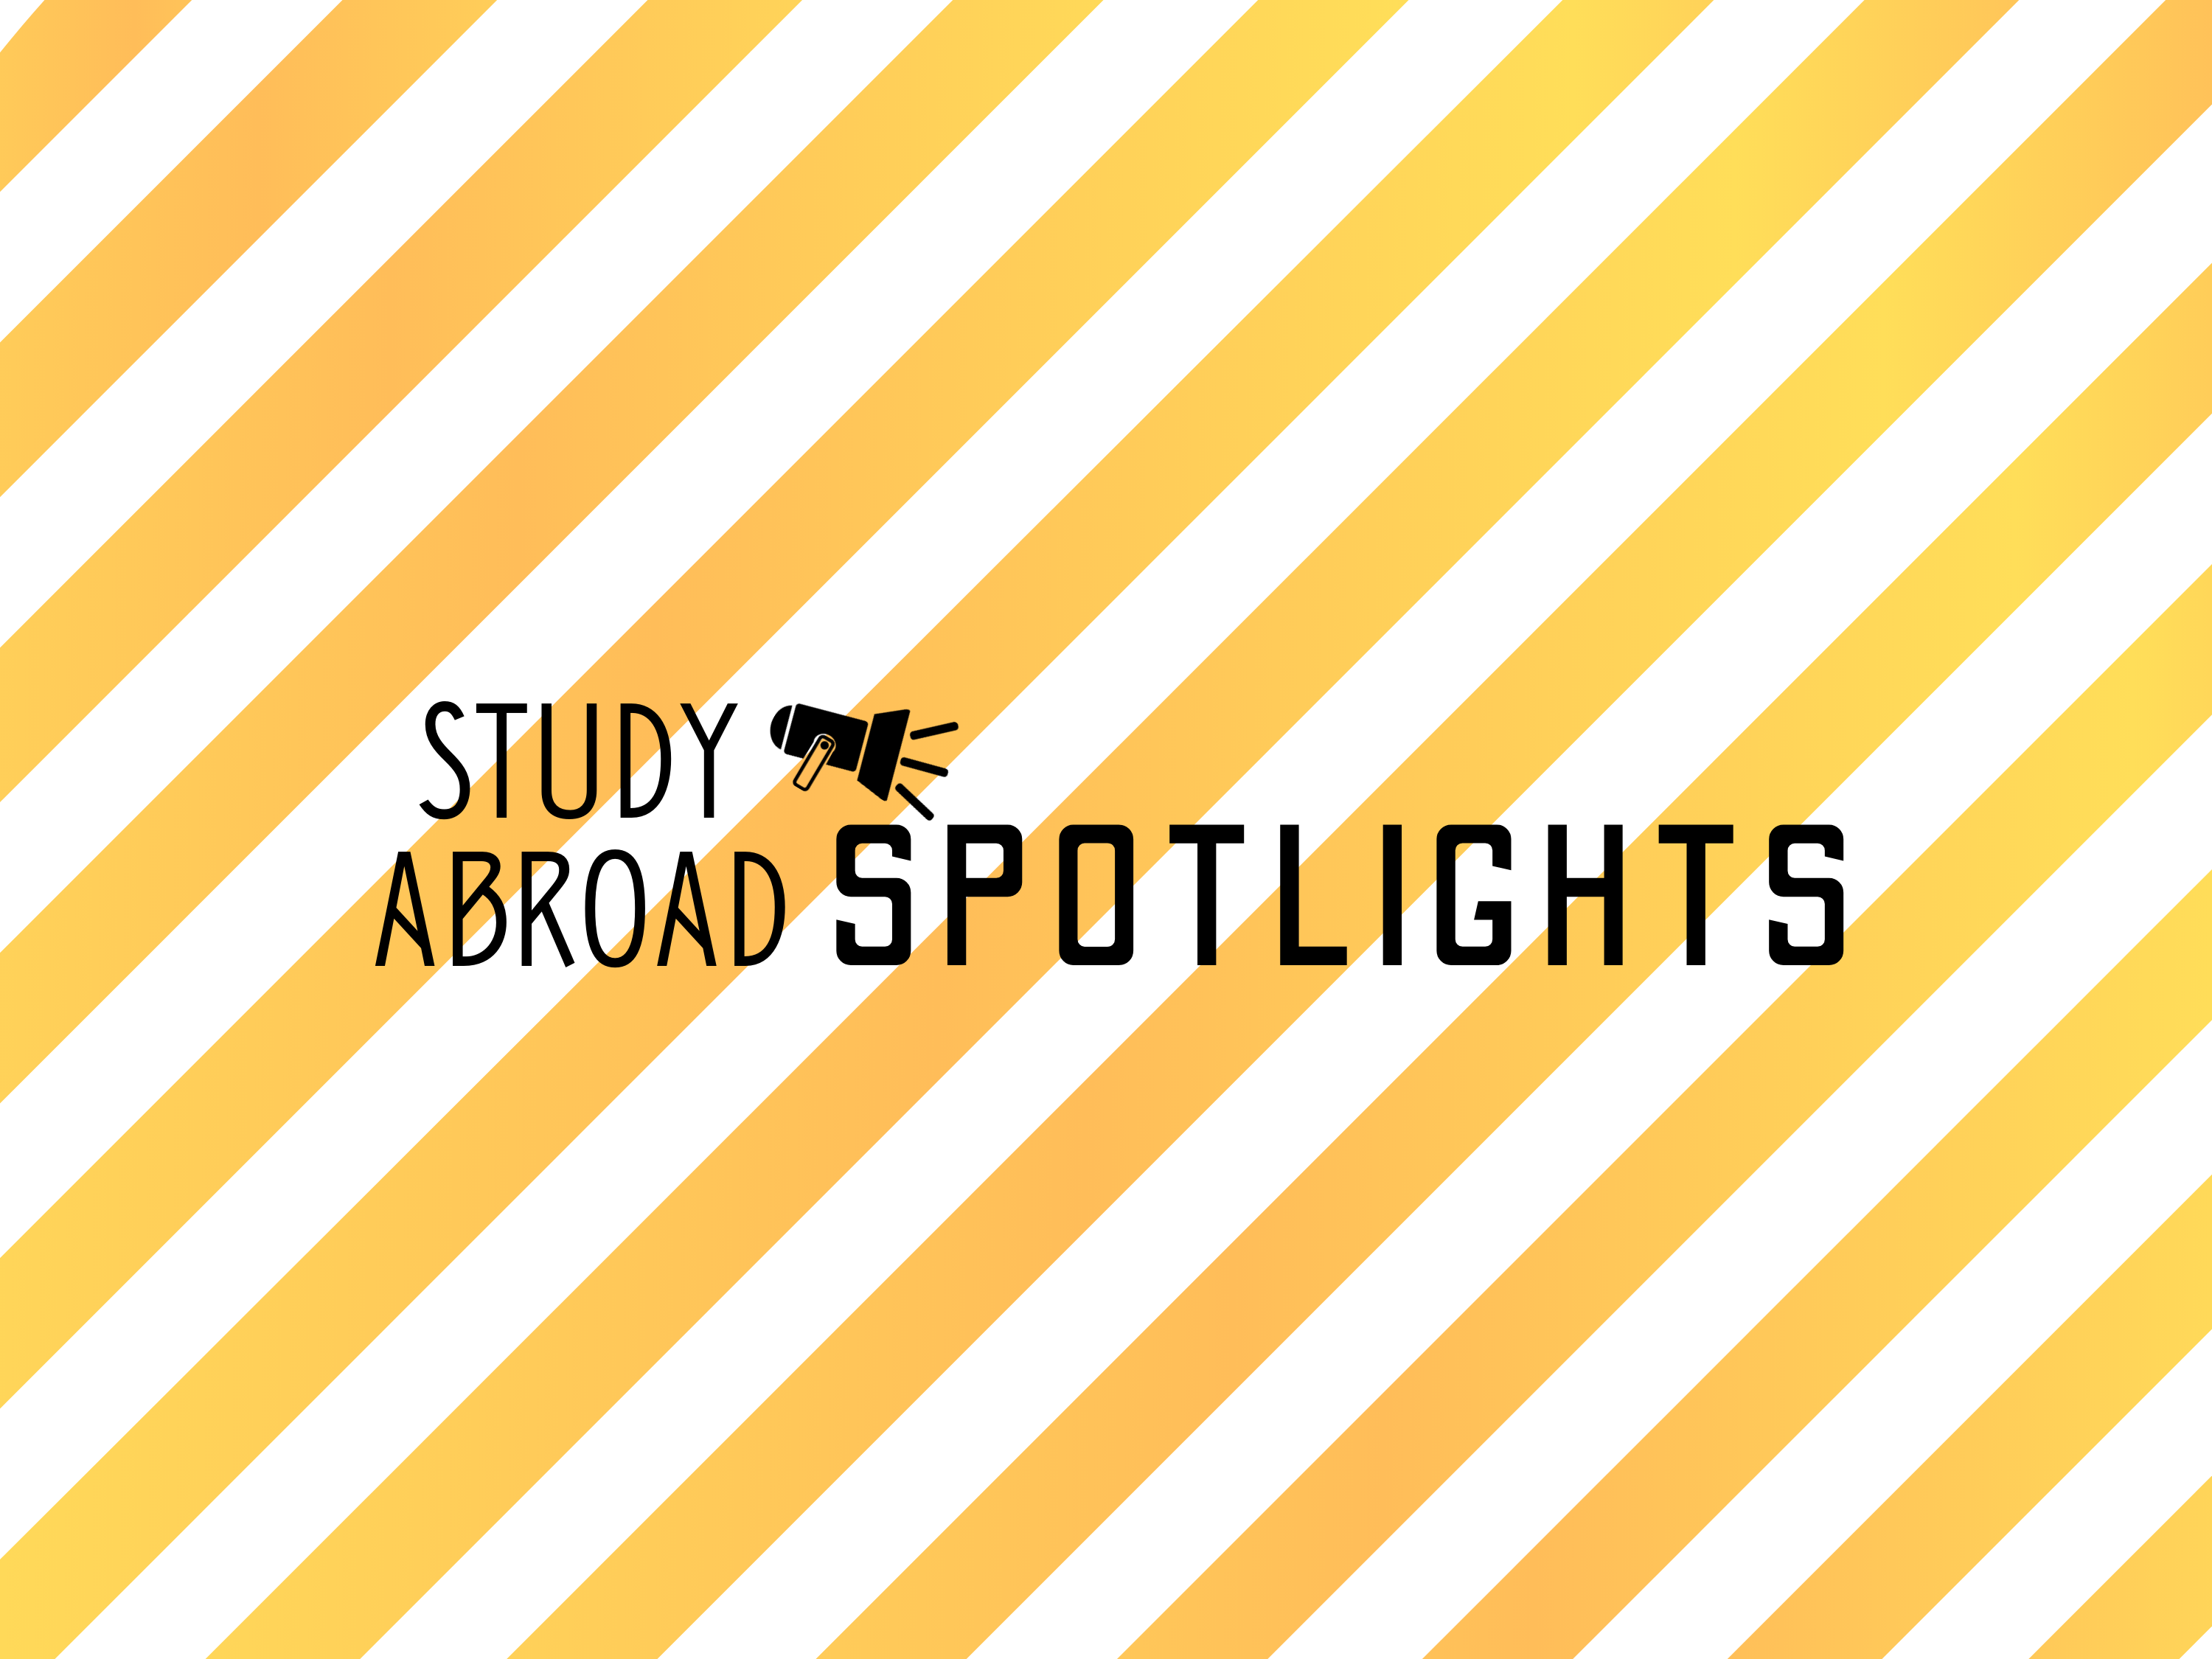 Study Abroad Spotlights